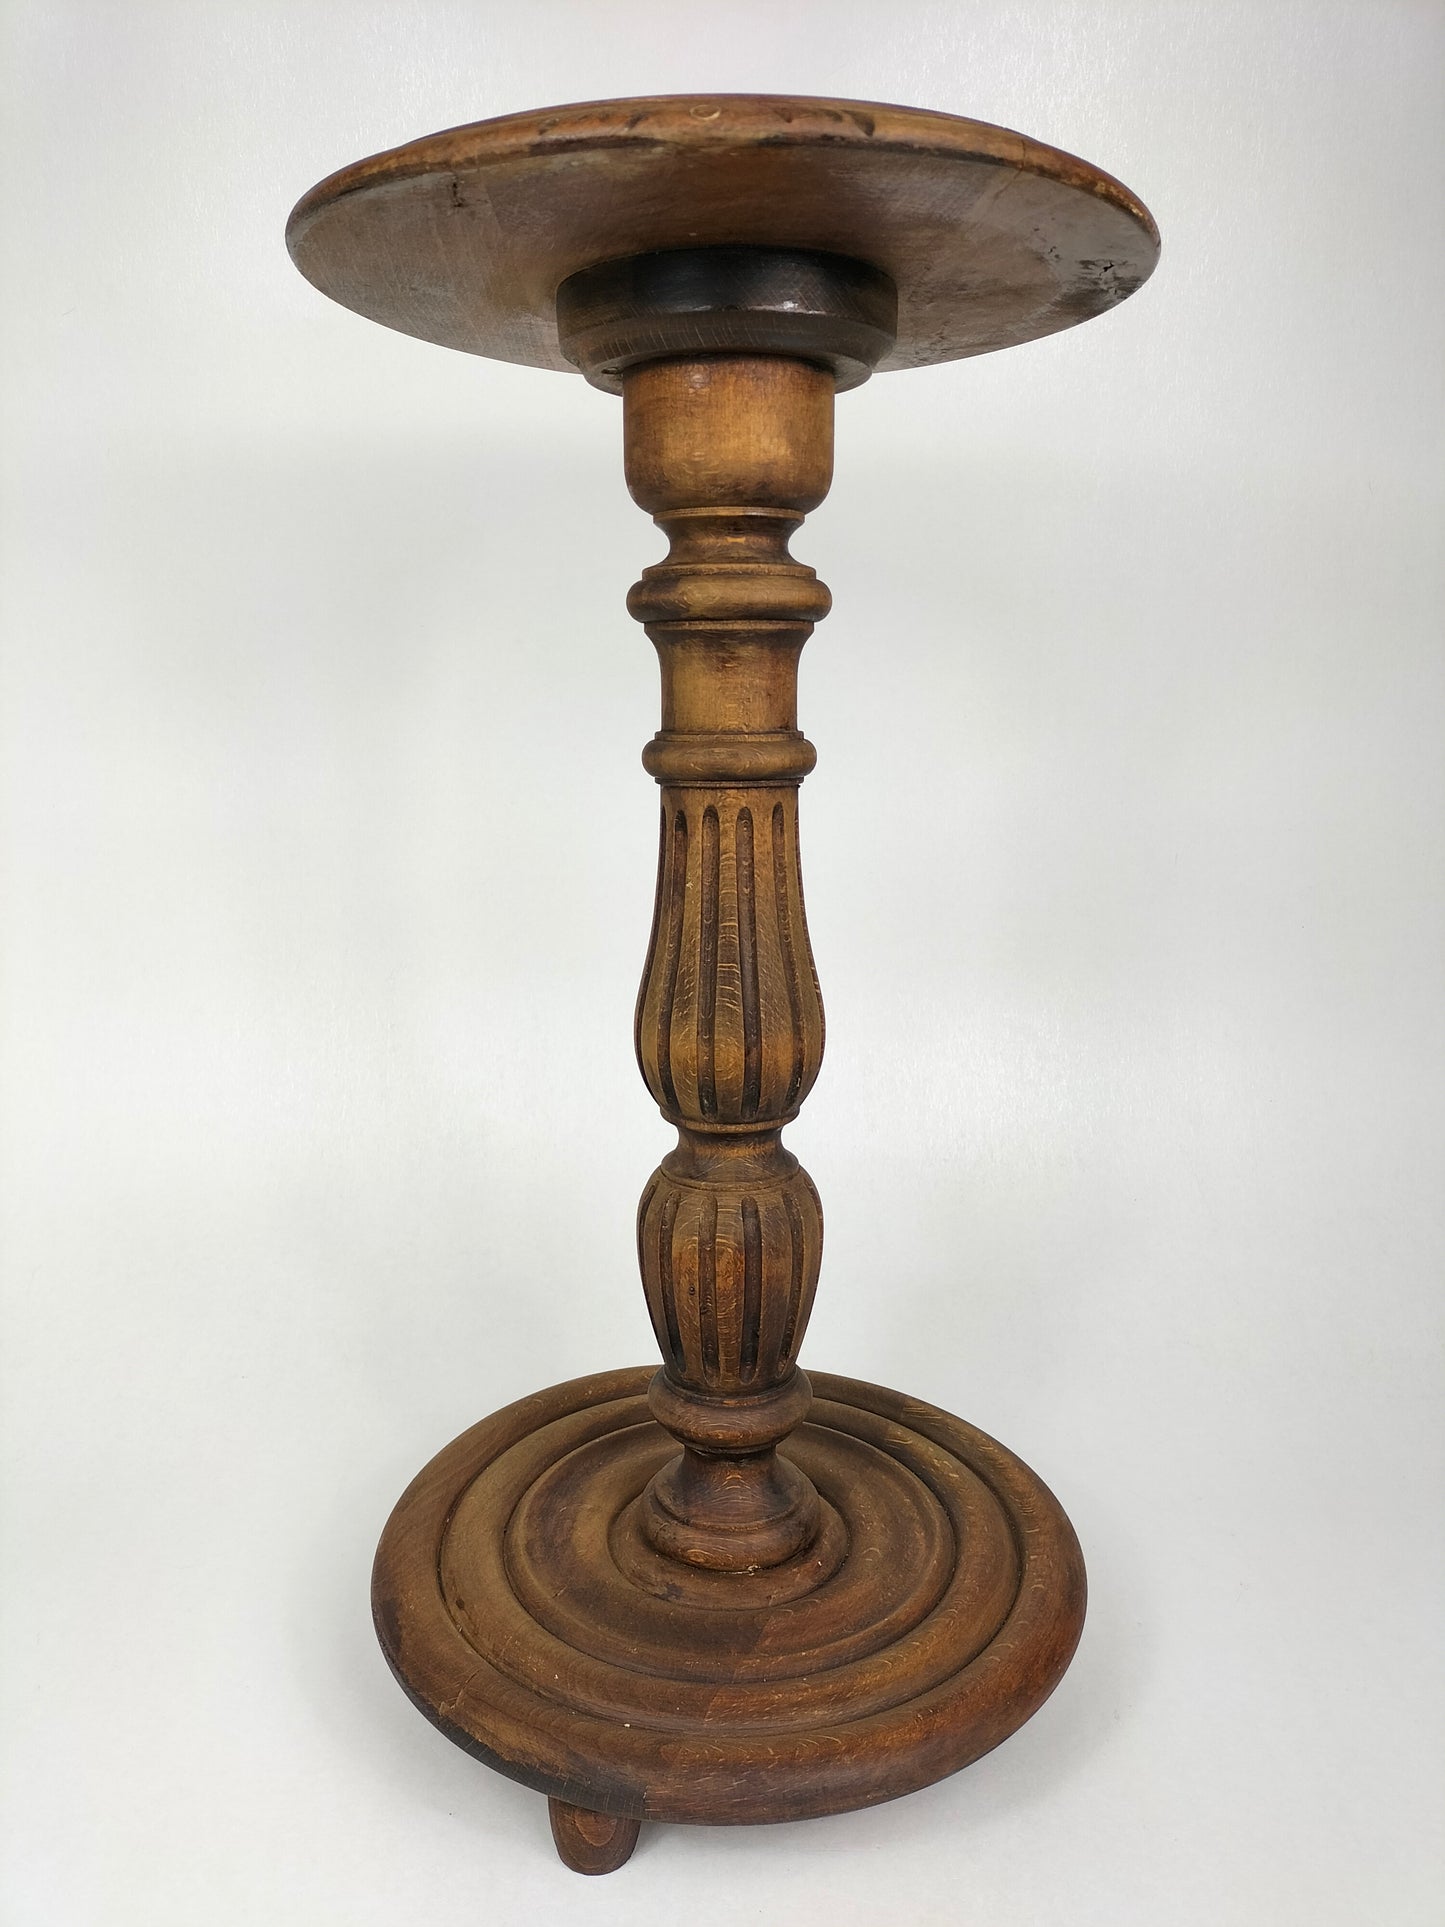 Vintage handmade pedestal made out of oak wood // Belgium - Mid 20th century